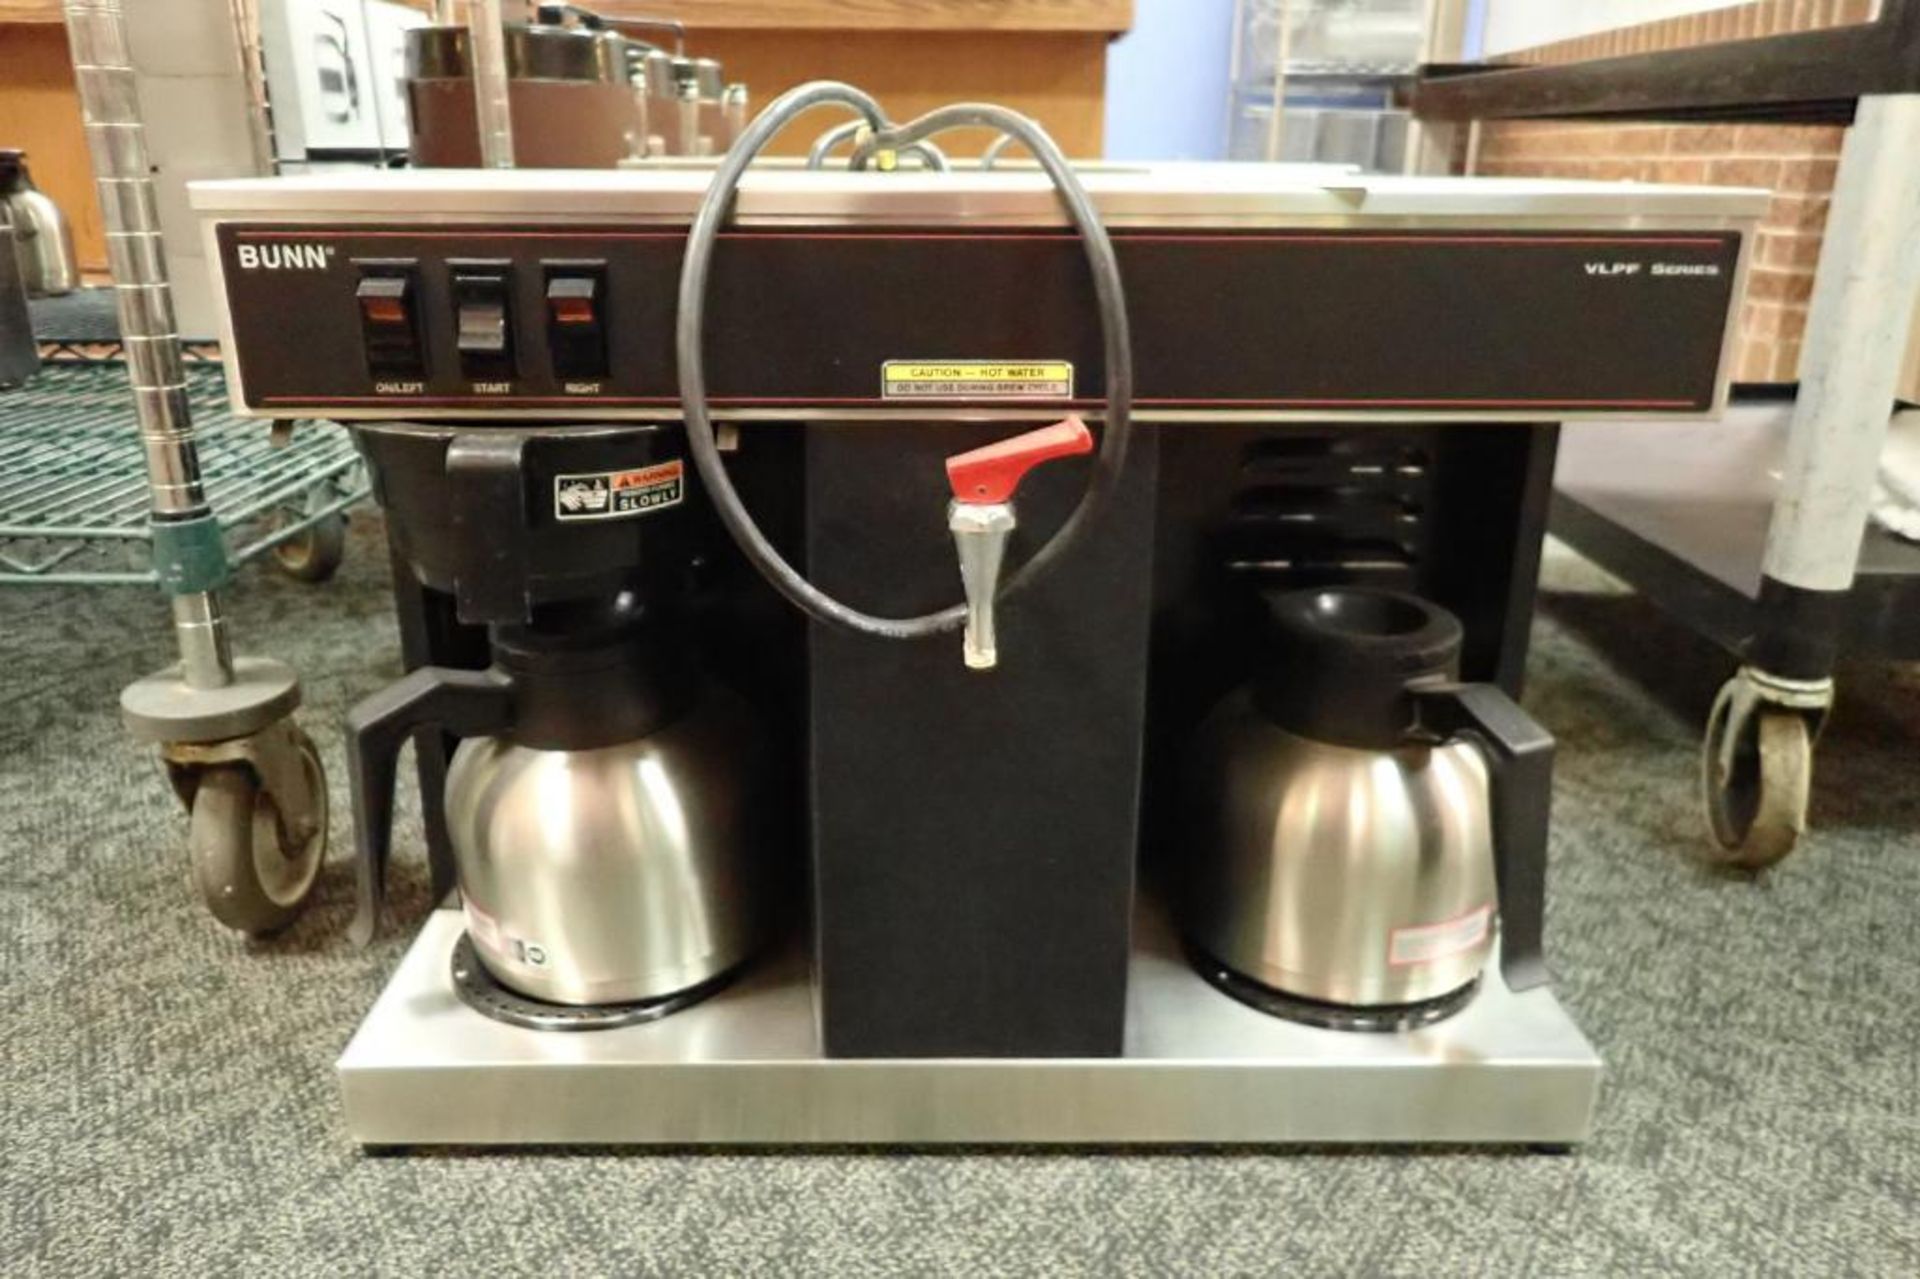 Bunn coffee maker with 2 coffee pots - Image 3 of 6